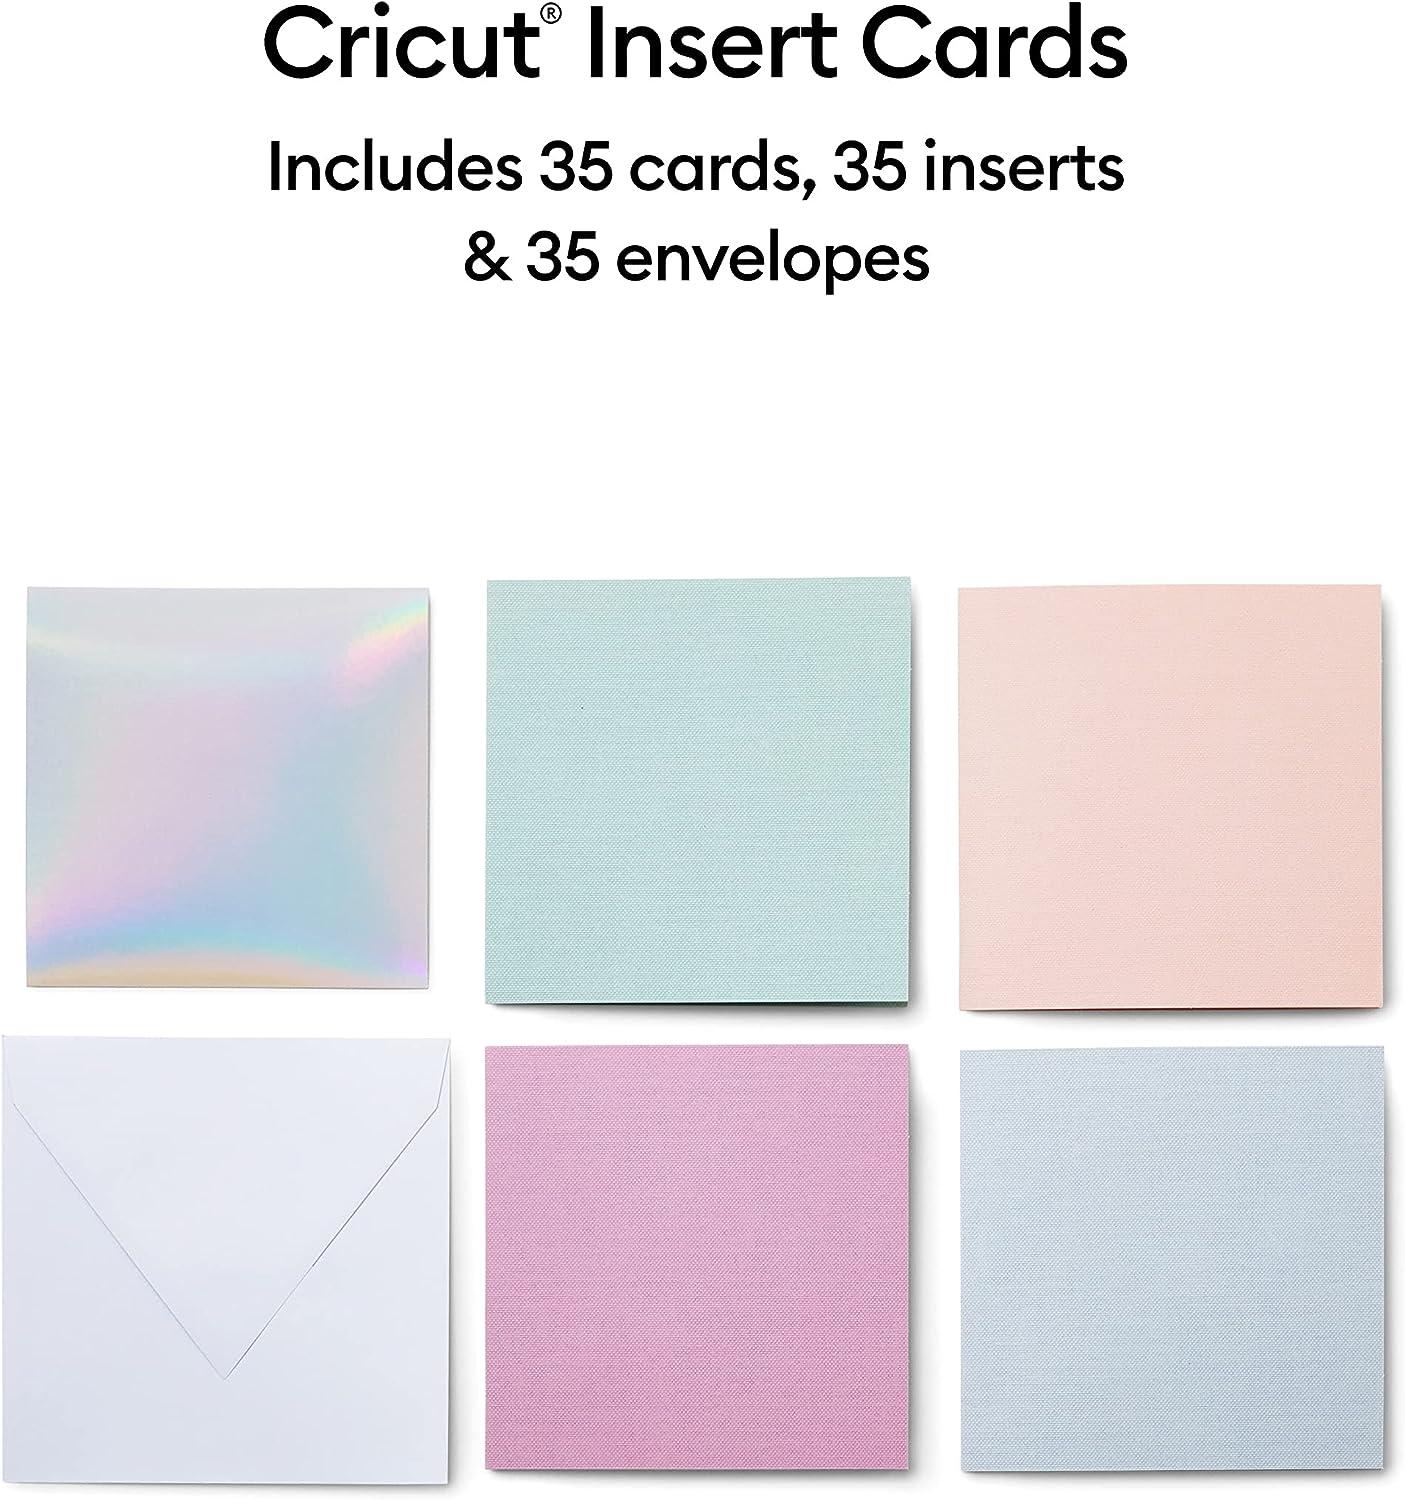 Cricut Insert Cards R40, Create Depth-Filled Birthday Cards, Thank